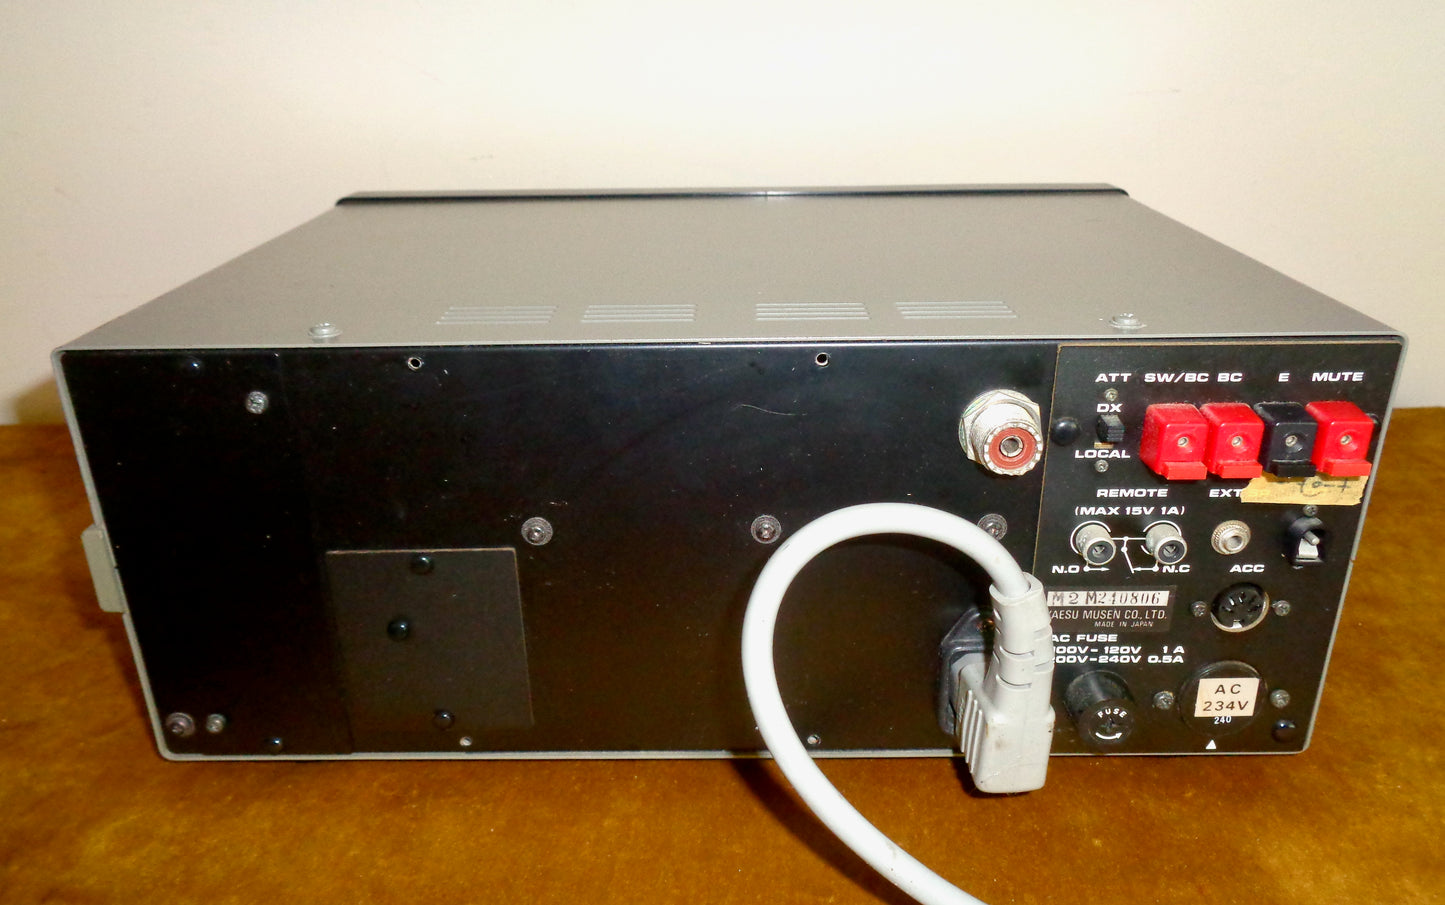 1980s Yaesu FRG-7700 Communications Receiver